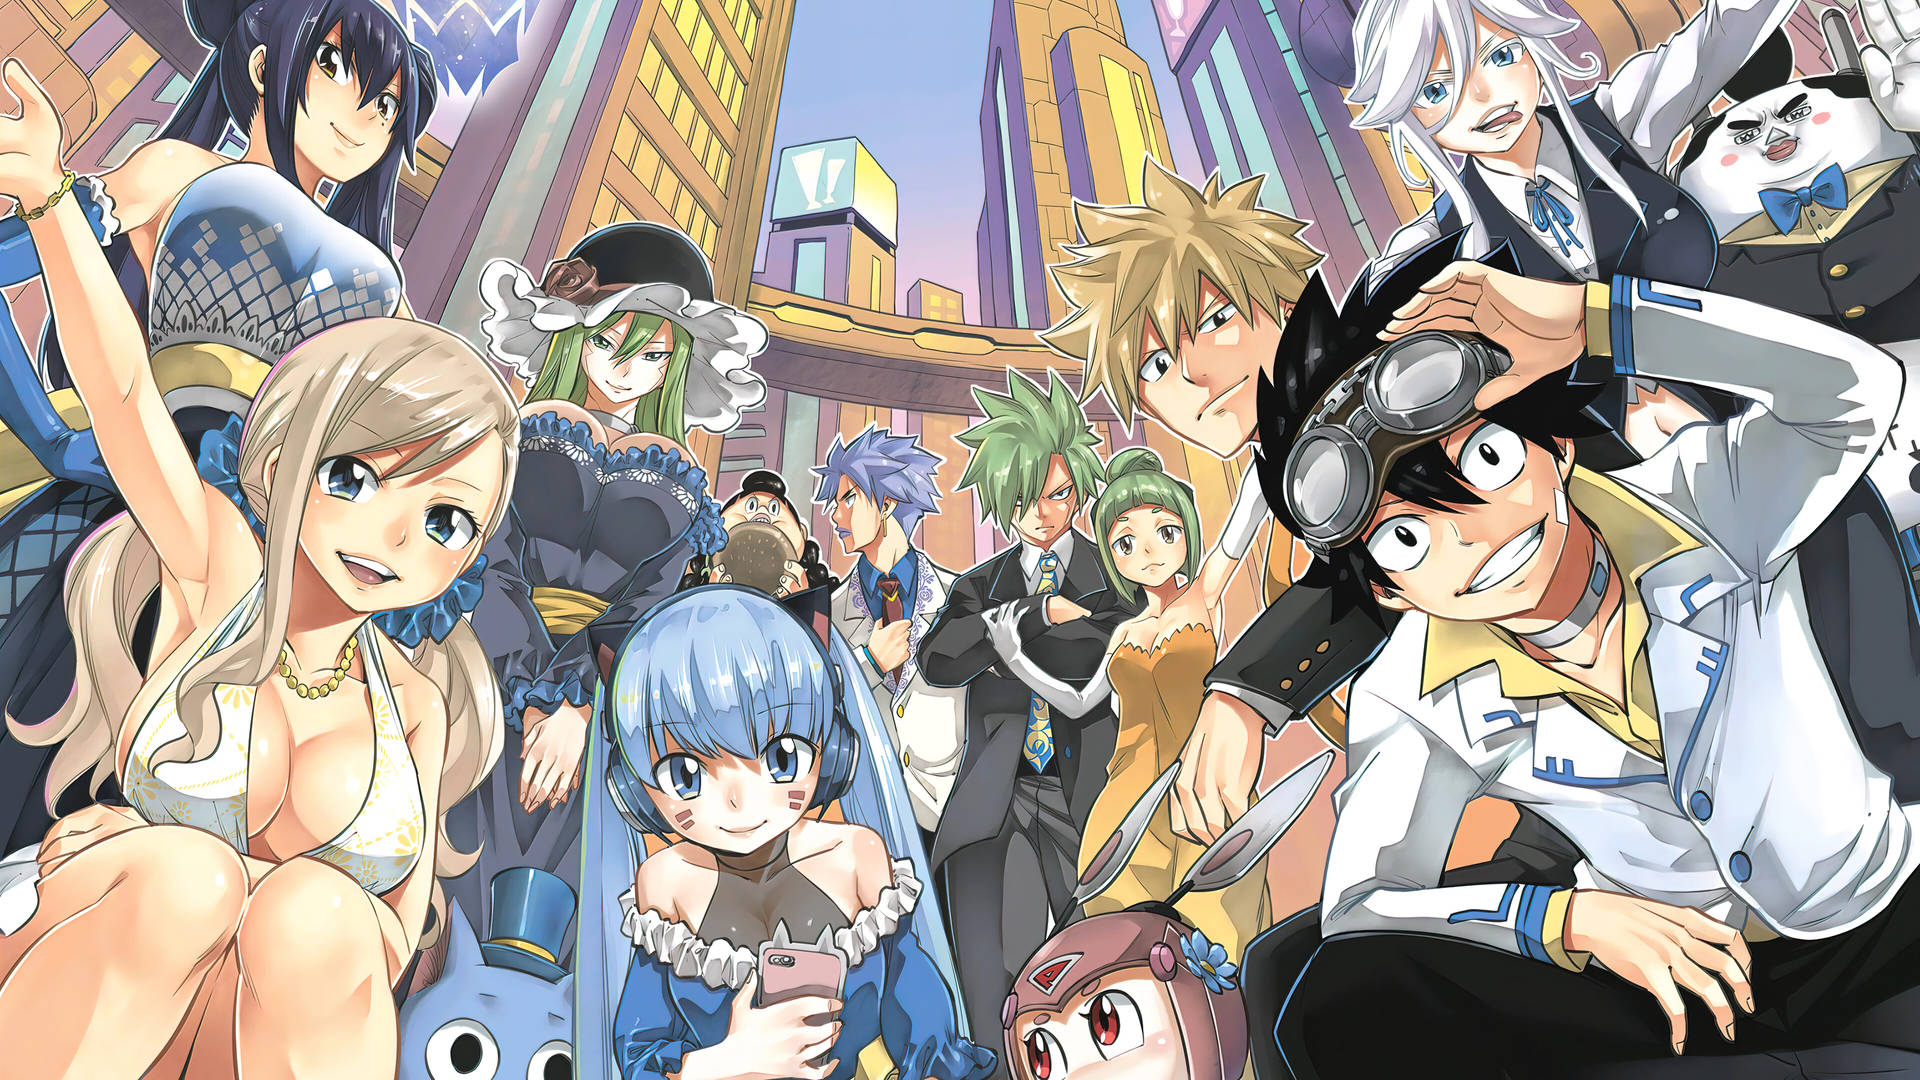 HD wallpaper: Anime, Edens Zero, Sister Ivry (Edens Zero